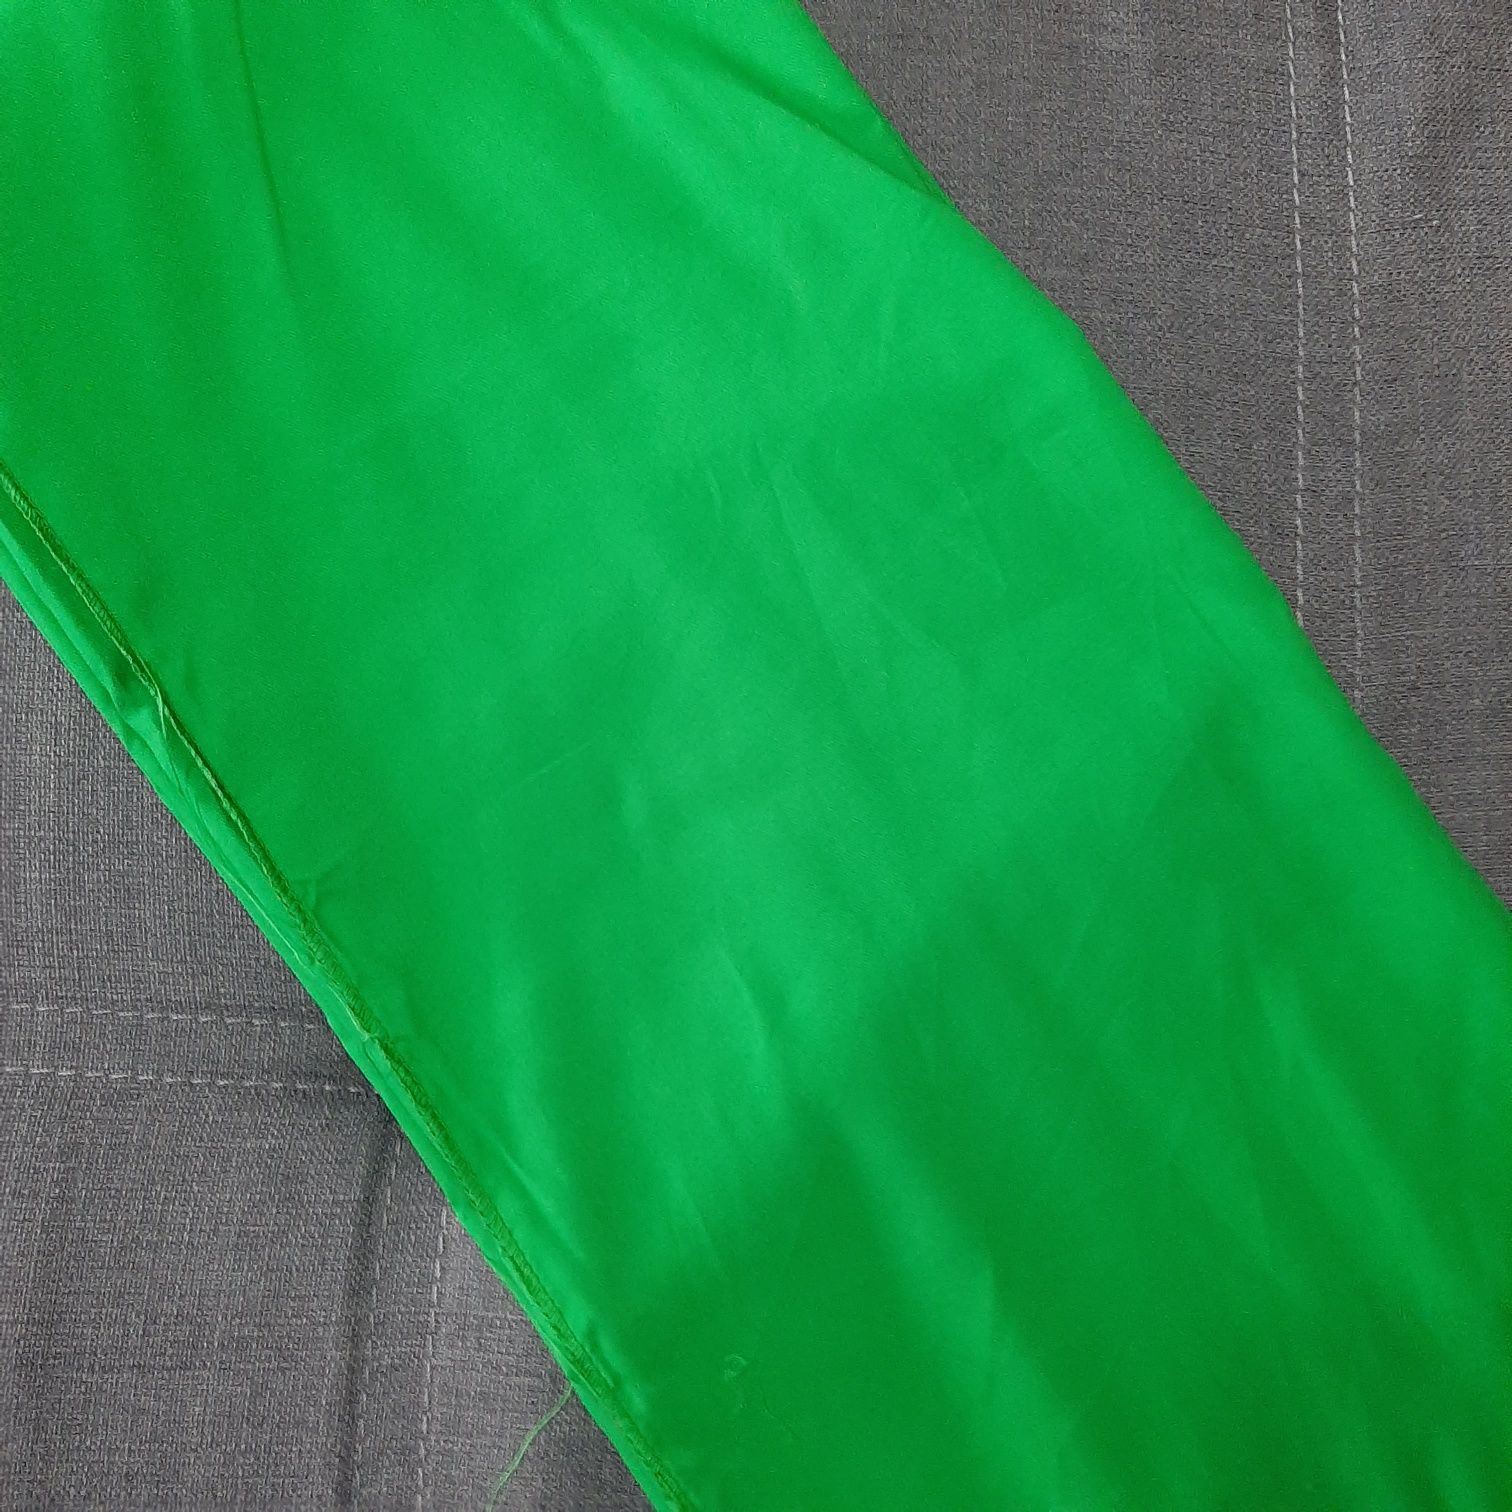 Ткань хромакей для фона зеленый для фотосъемок 2×1.5 3×2 3×4 метра